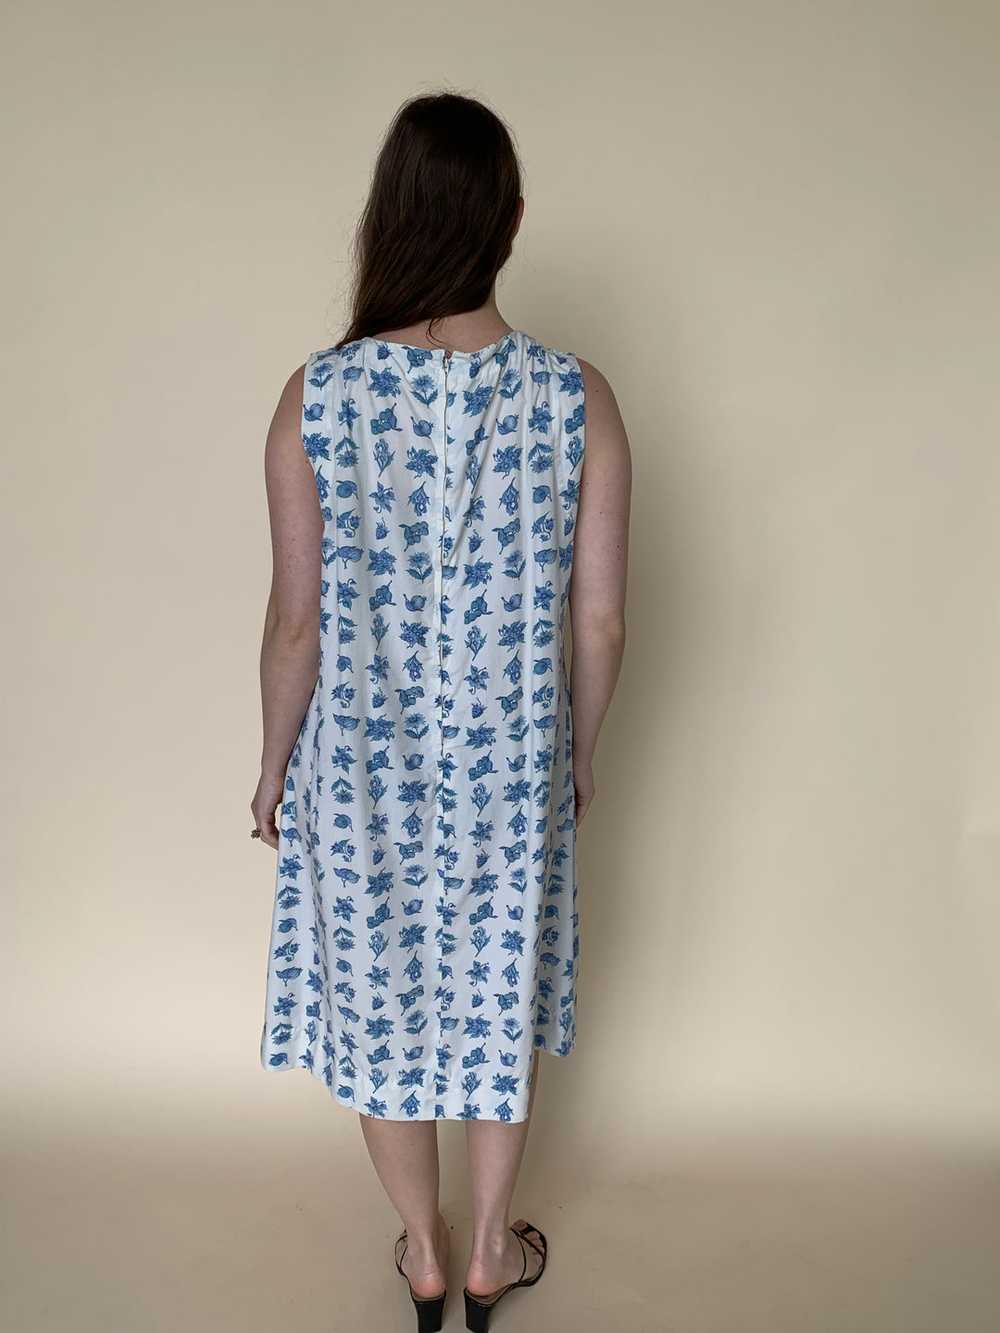 Blueberry print vintage dress - image 5